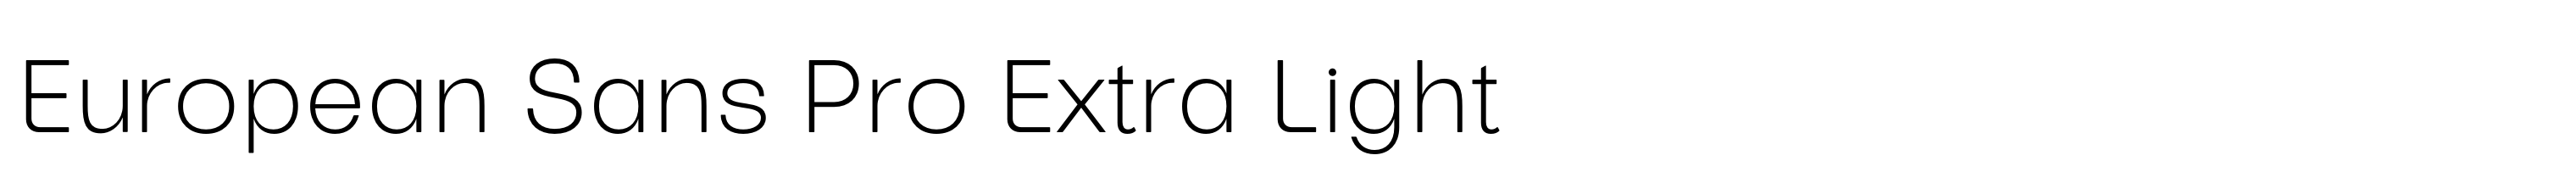 European Sans Pro Extra Light